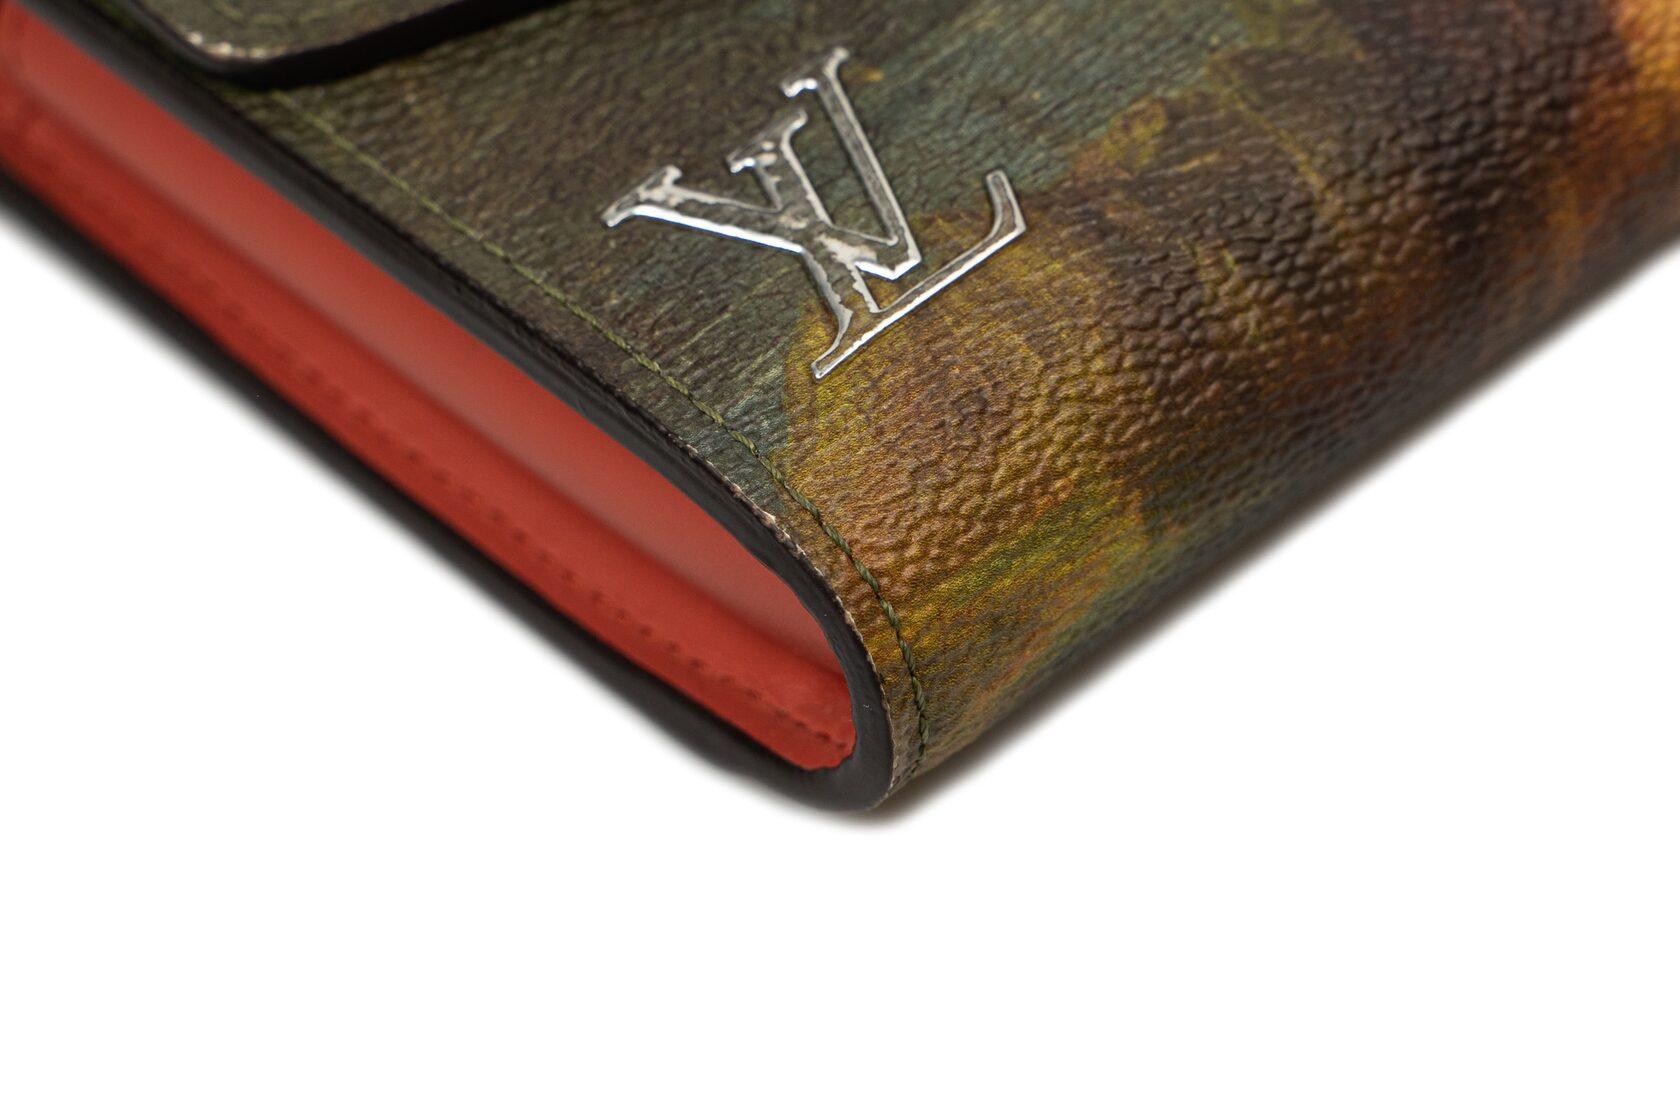 Louis Vuitton Chain Bag Limited Edition with designer Jeff Coons - Da Vinci For Sale 9